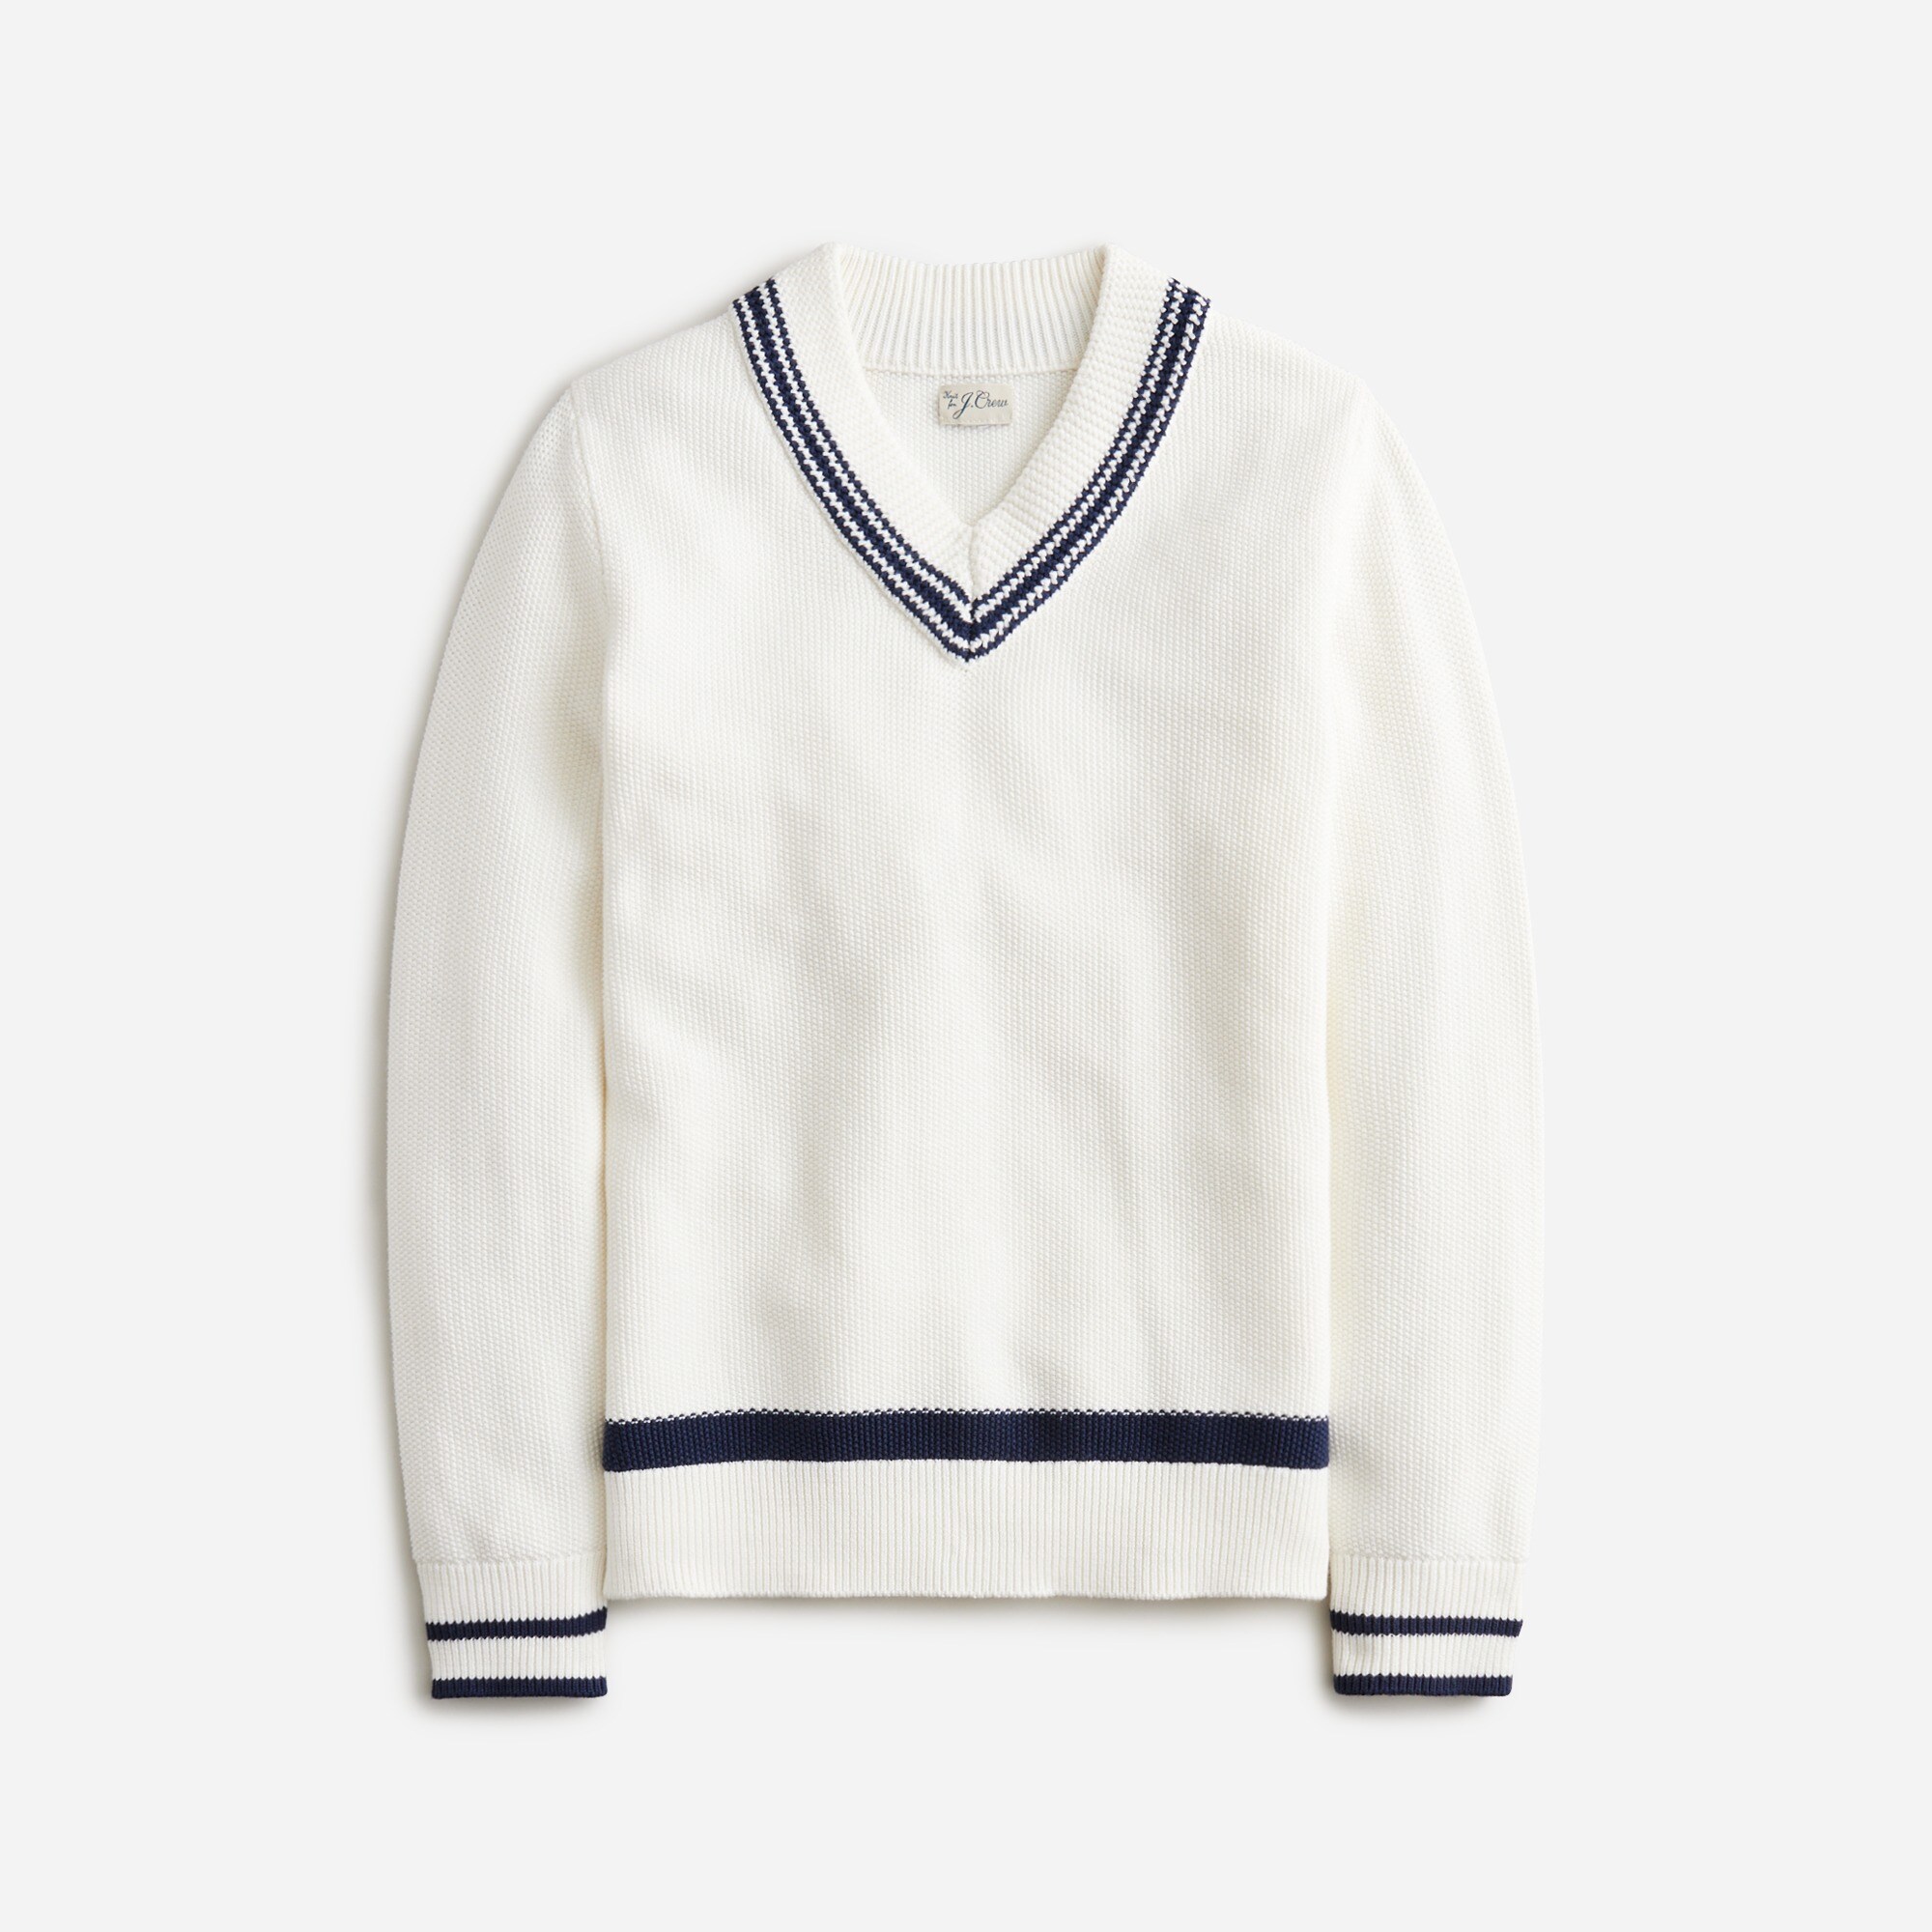  Cotton V-neck cricket sweater